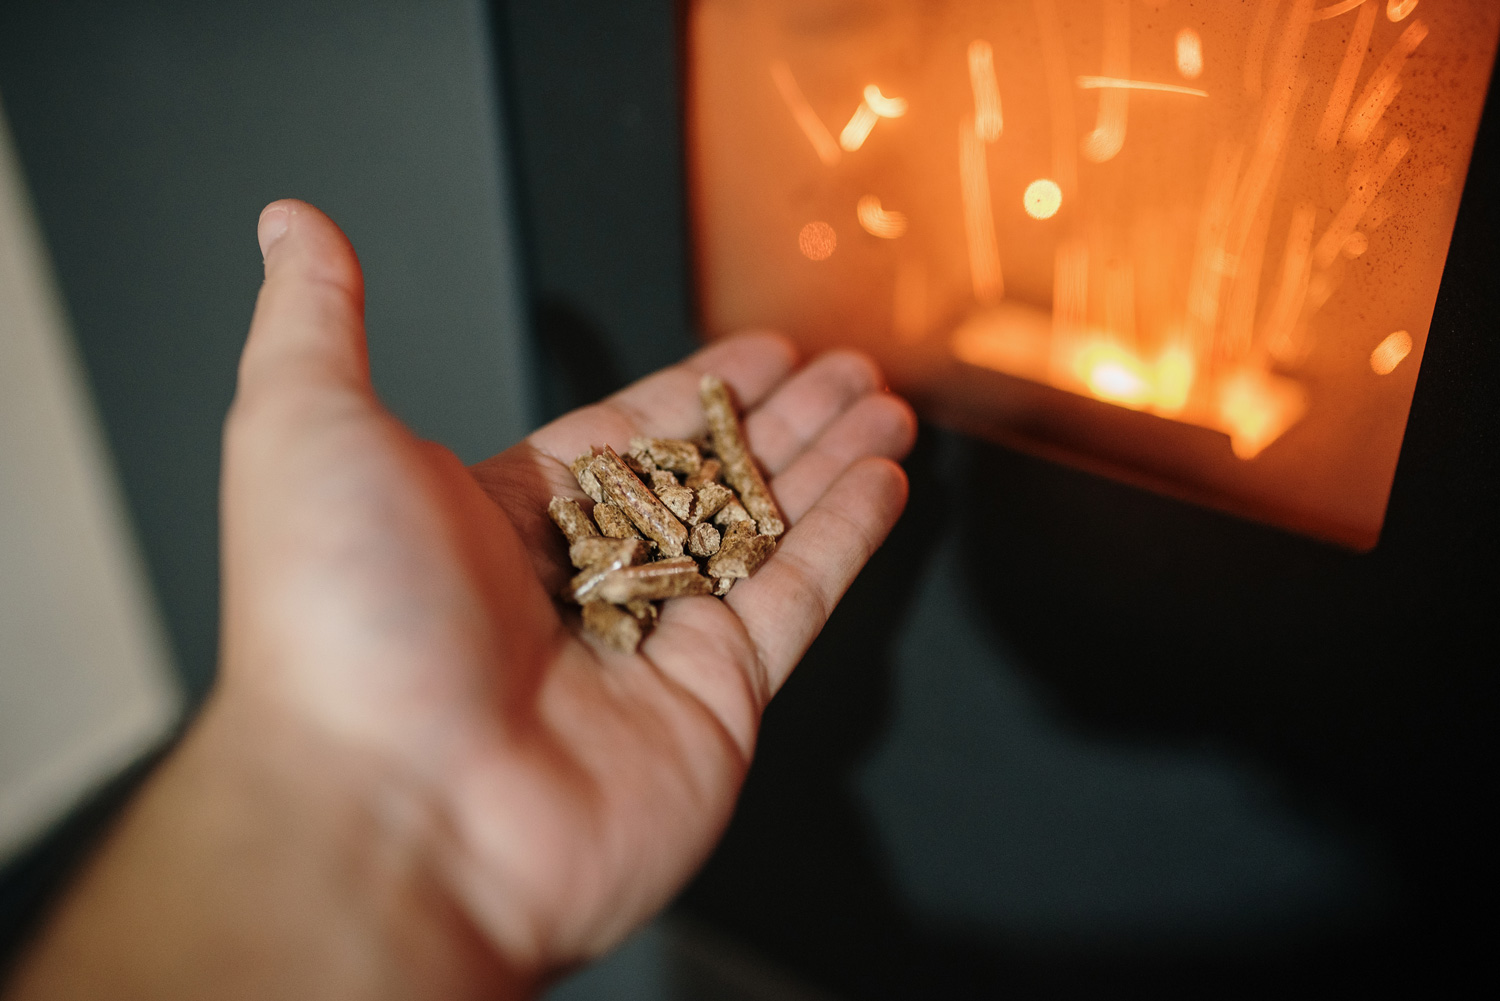  Human hand holding biomass pellets by a fireplace